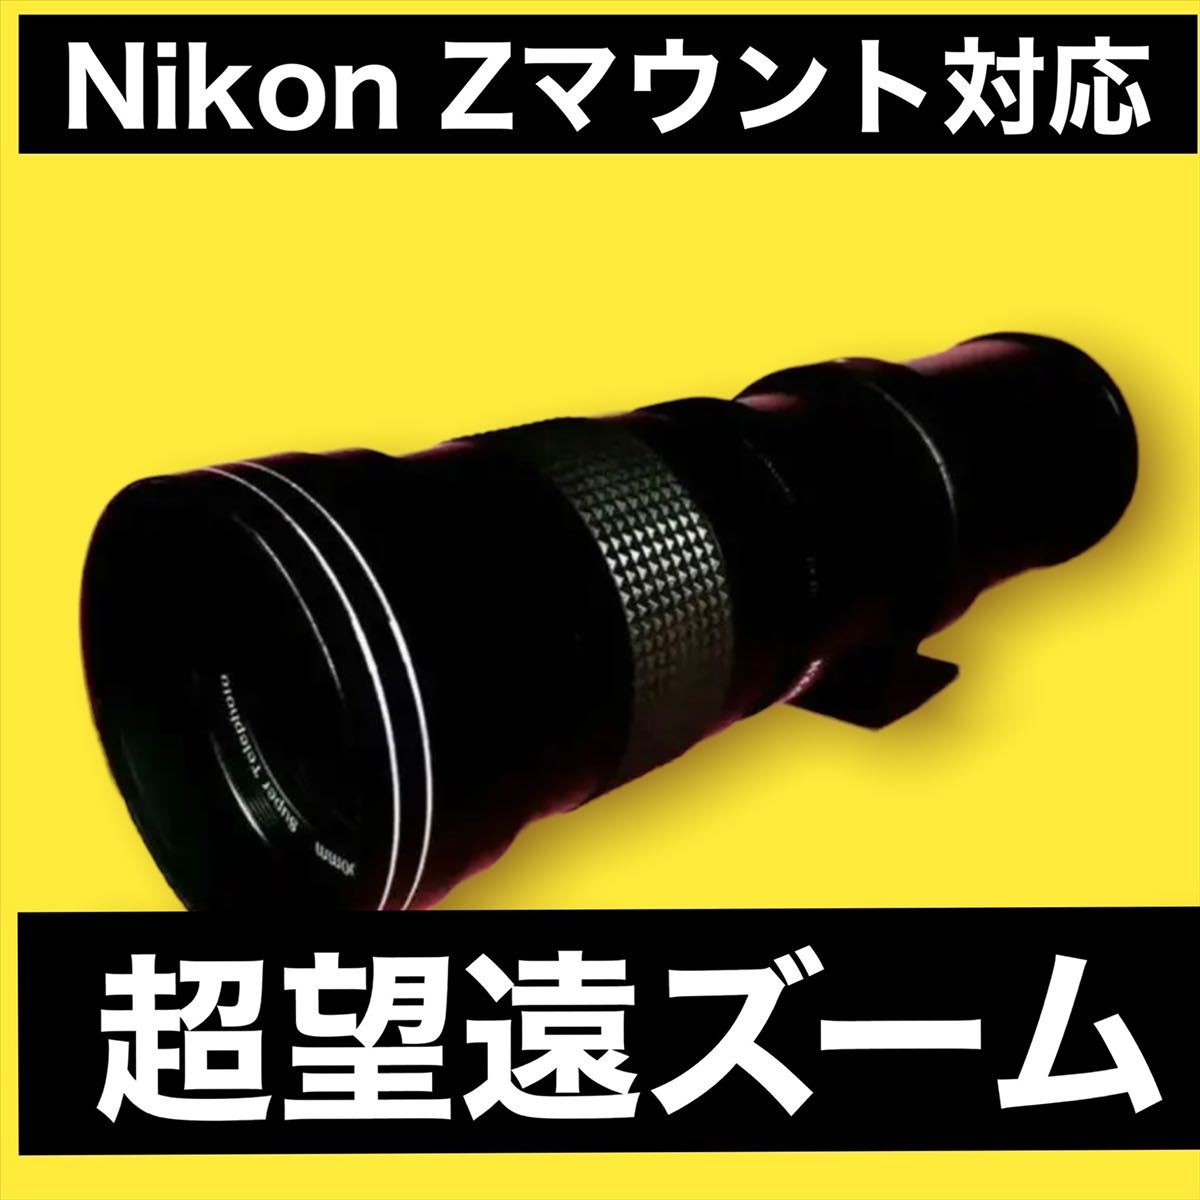 Nikon Zマウント対応！スーパーズームレンズ！ブラック黒色！美品！綺麗！！超望遠レンズ！初心者OK！おすすめ！